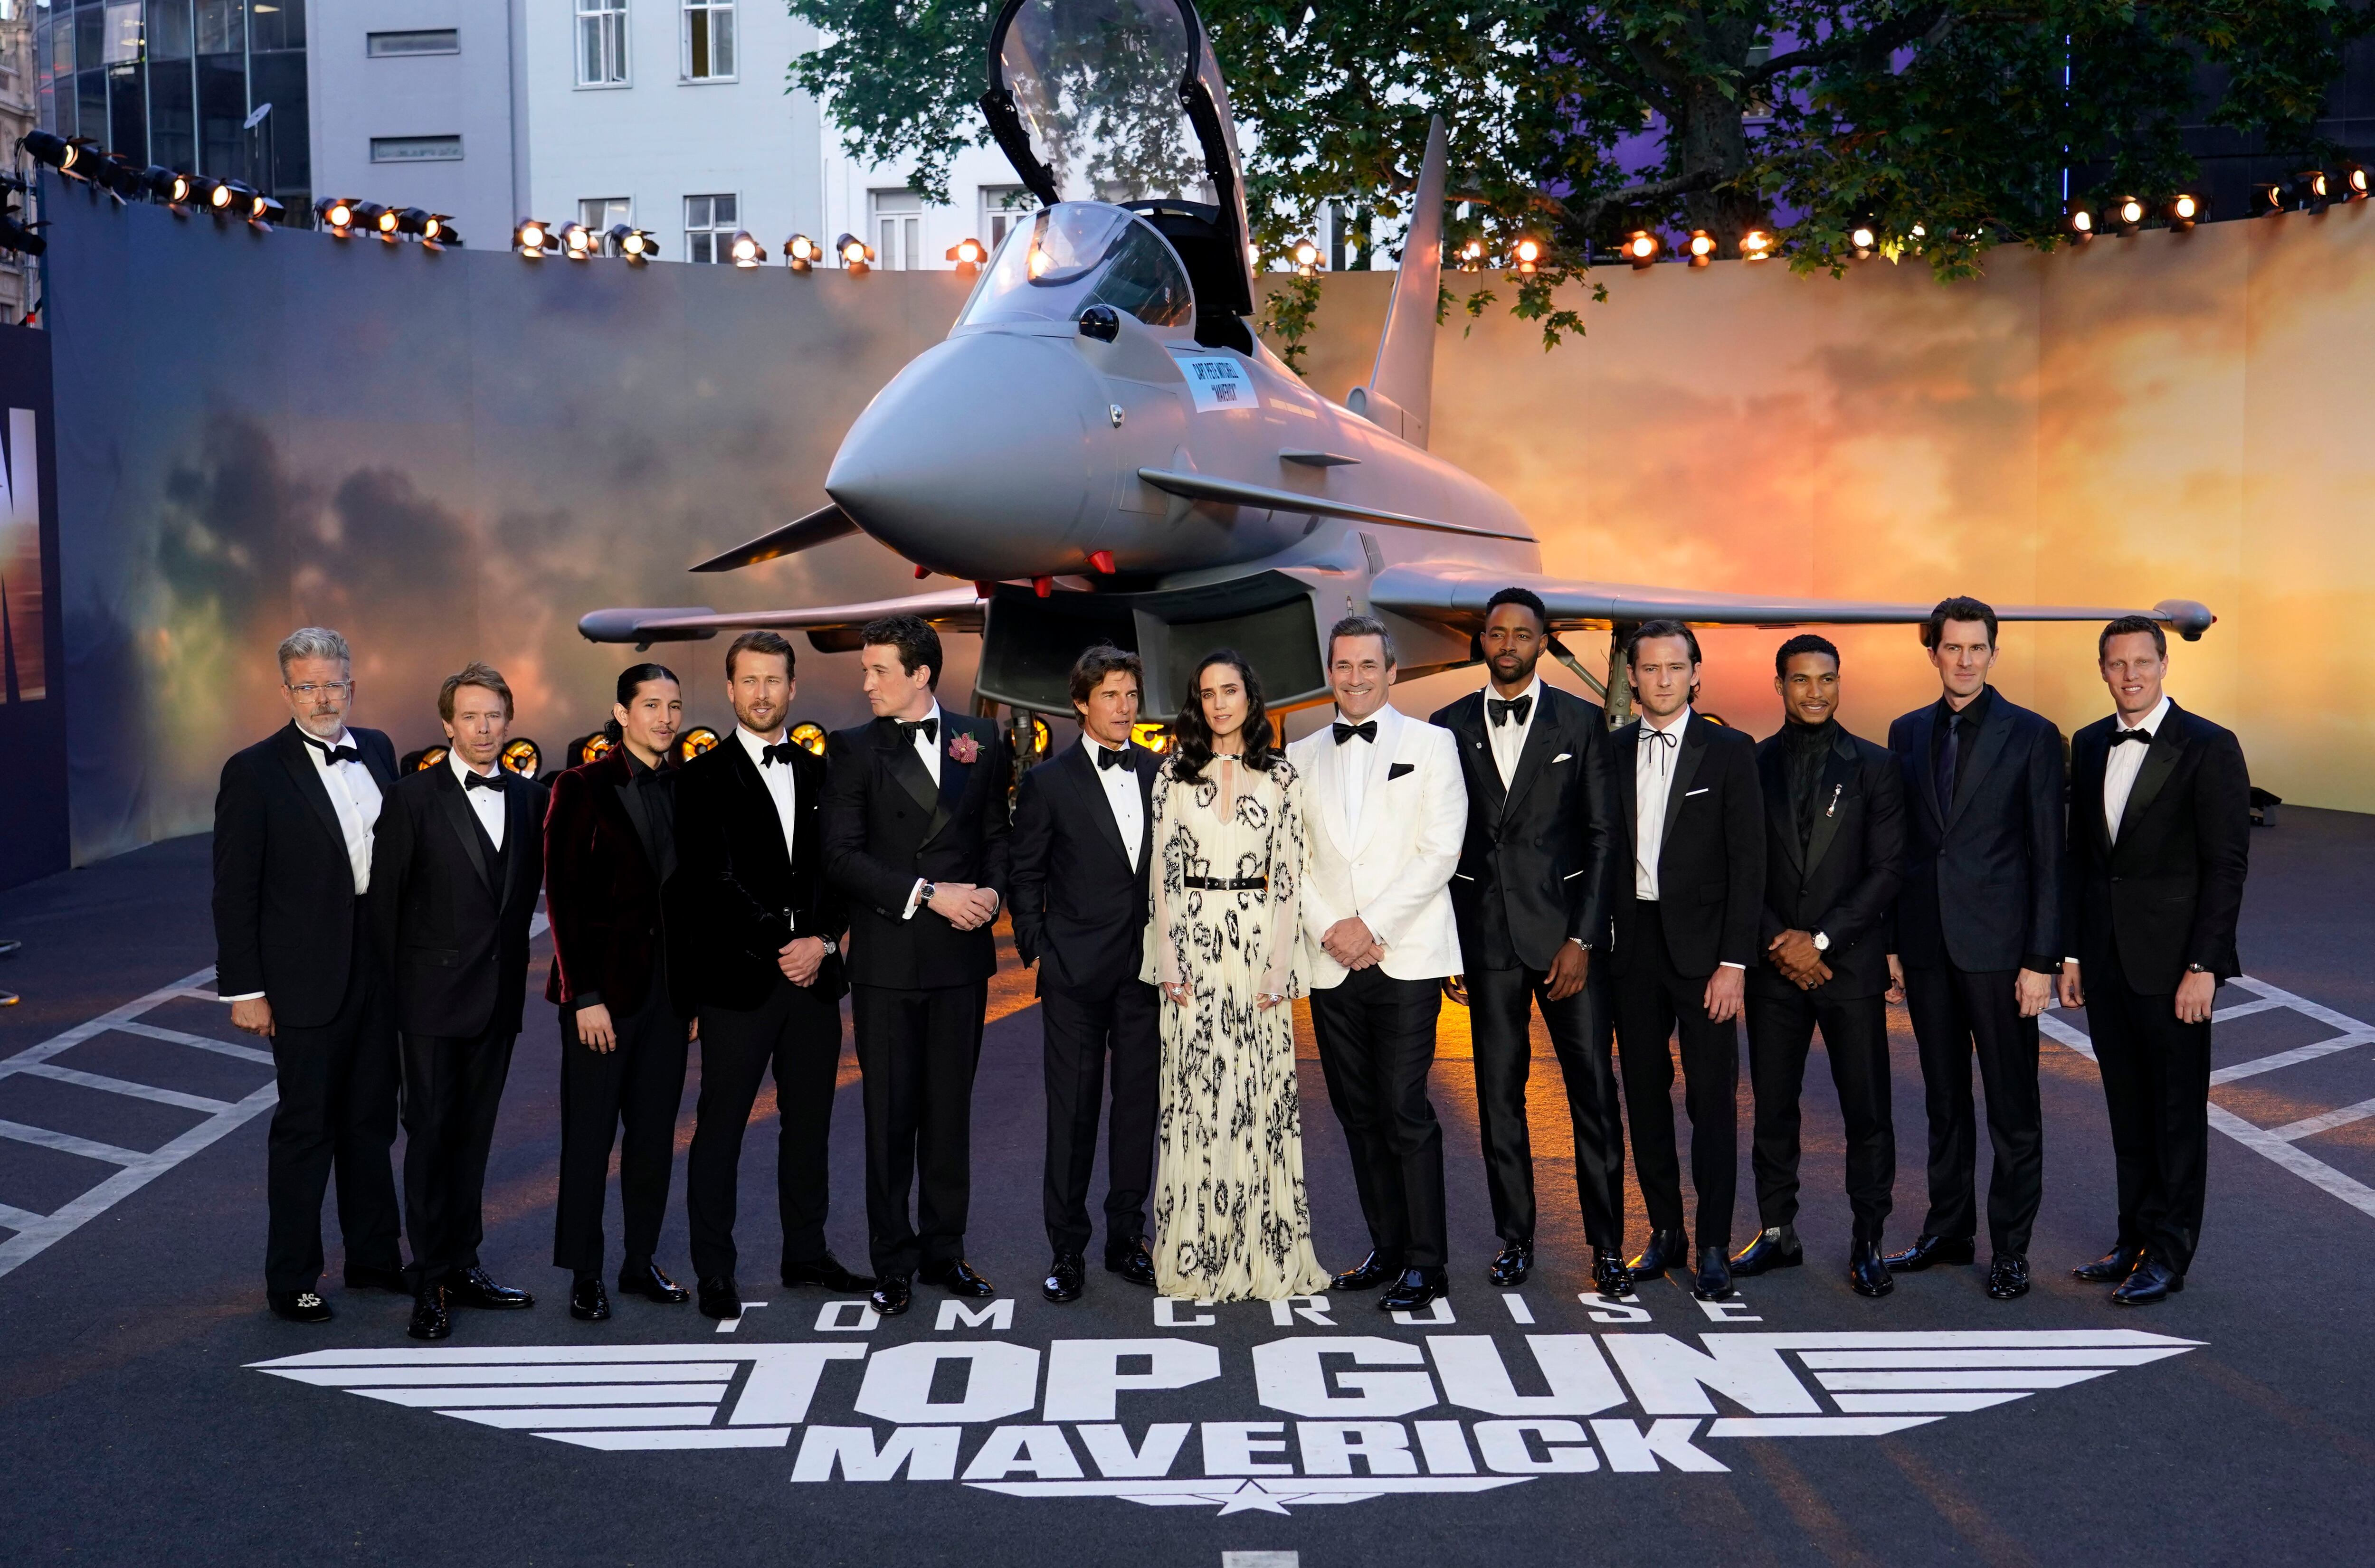 Maverick’ wins Tom Cruise 1st $100 million opening